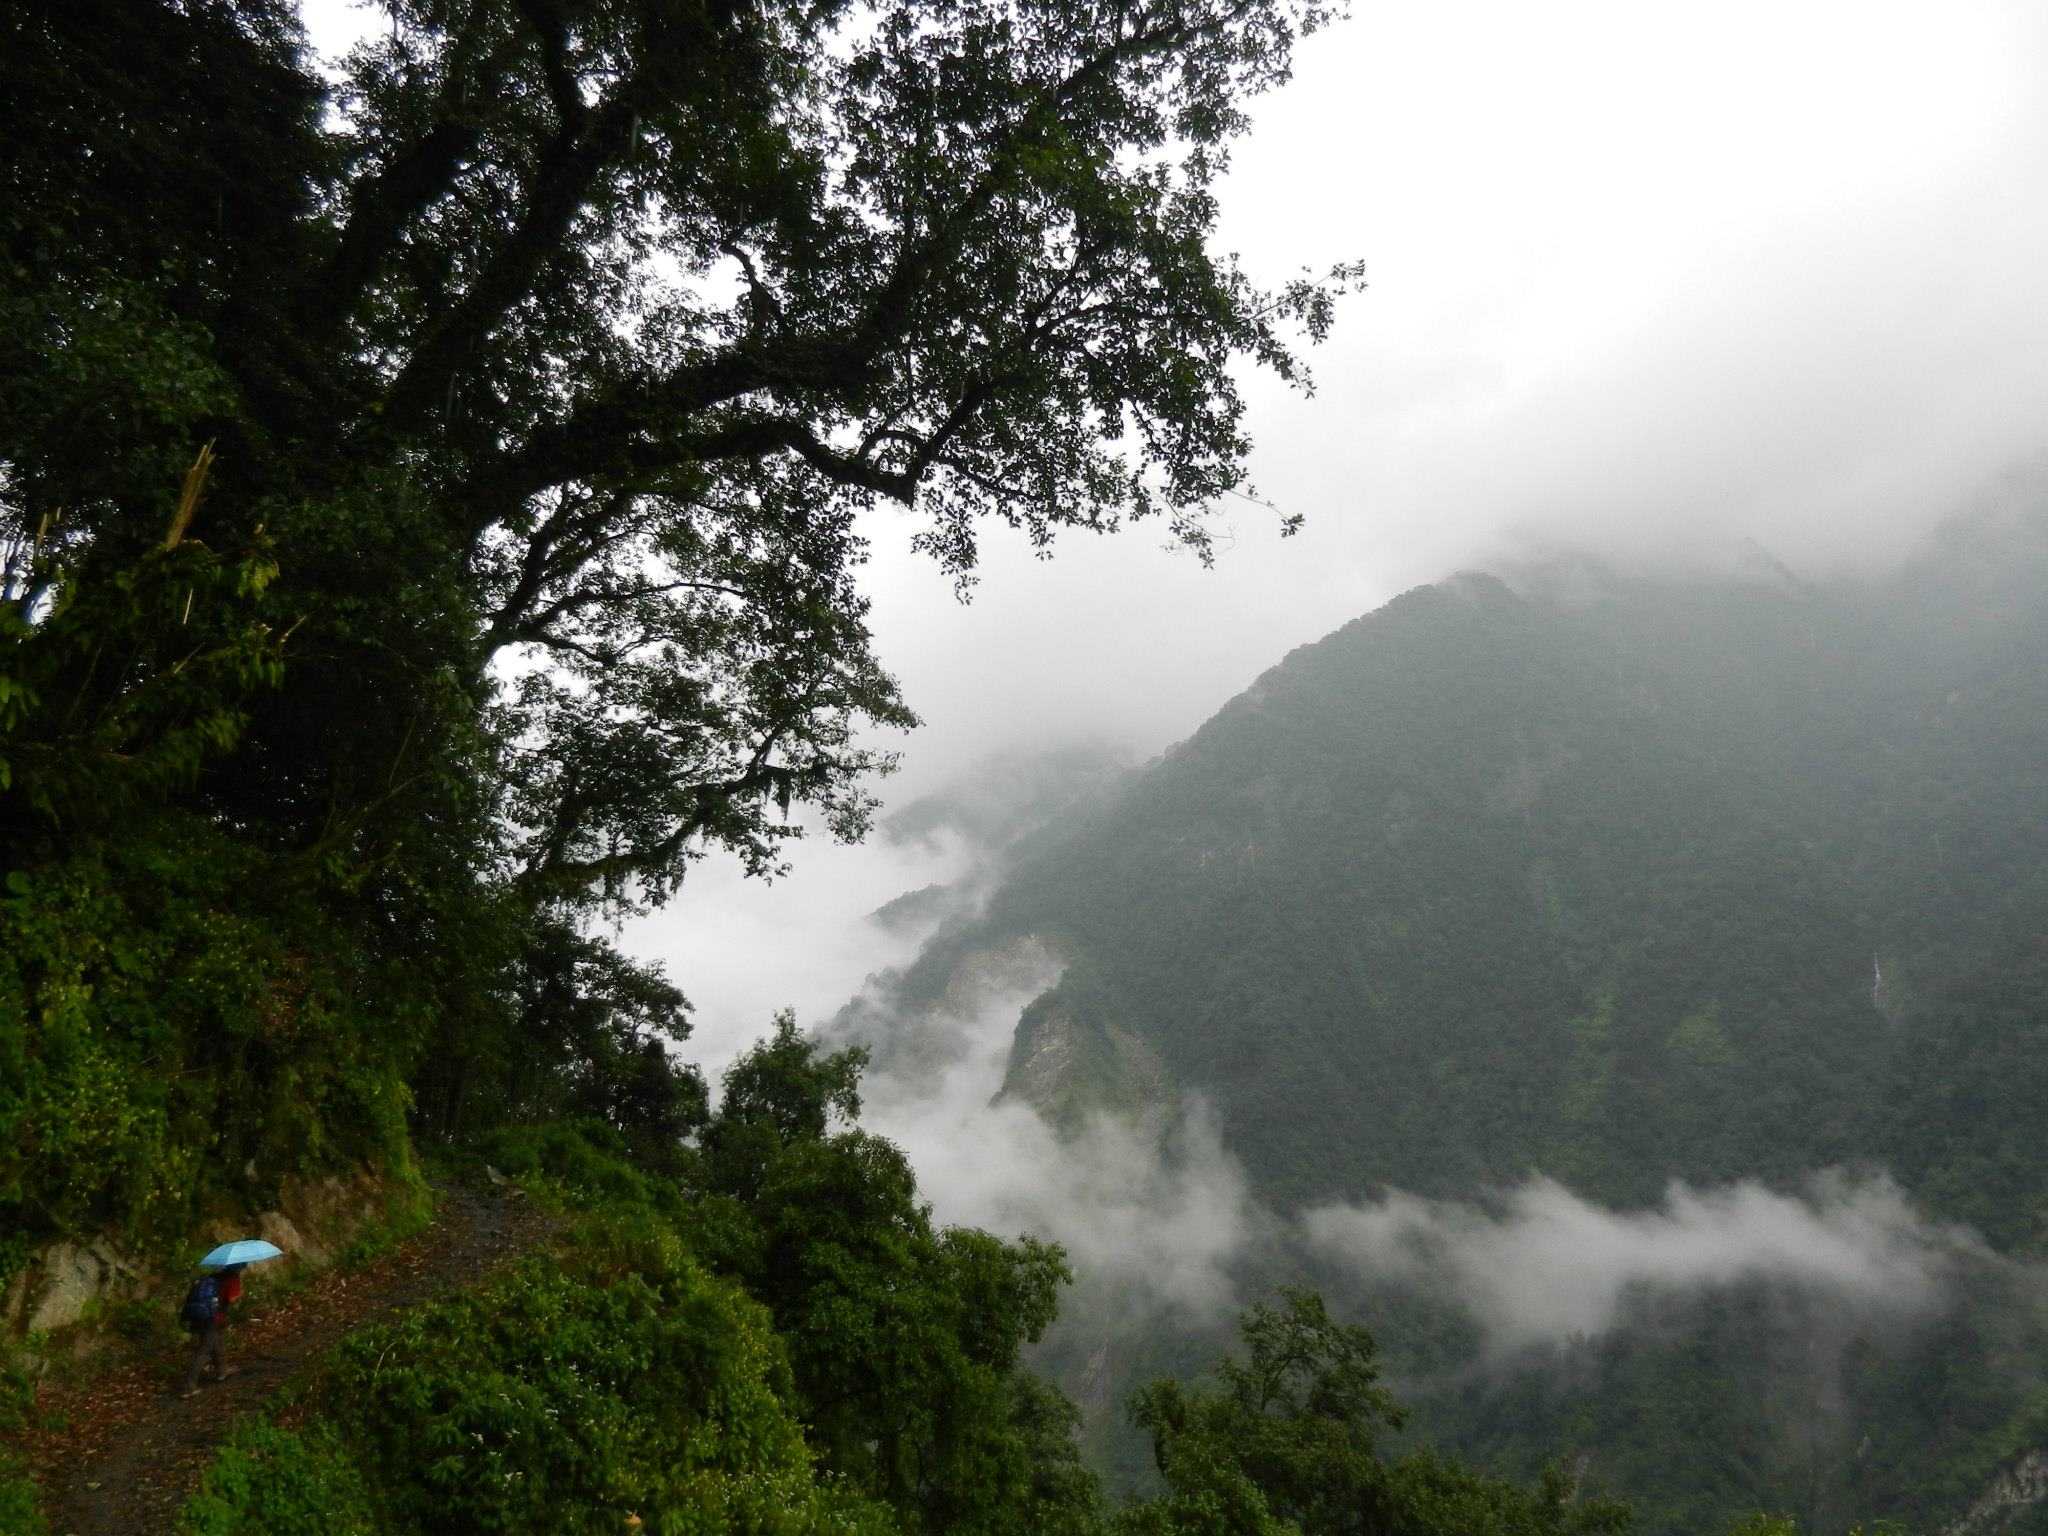 Misty path through high green hills